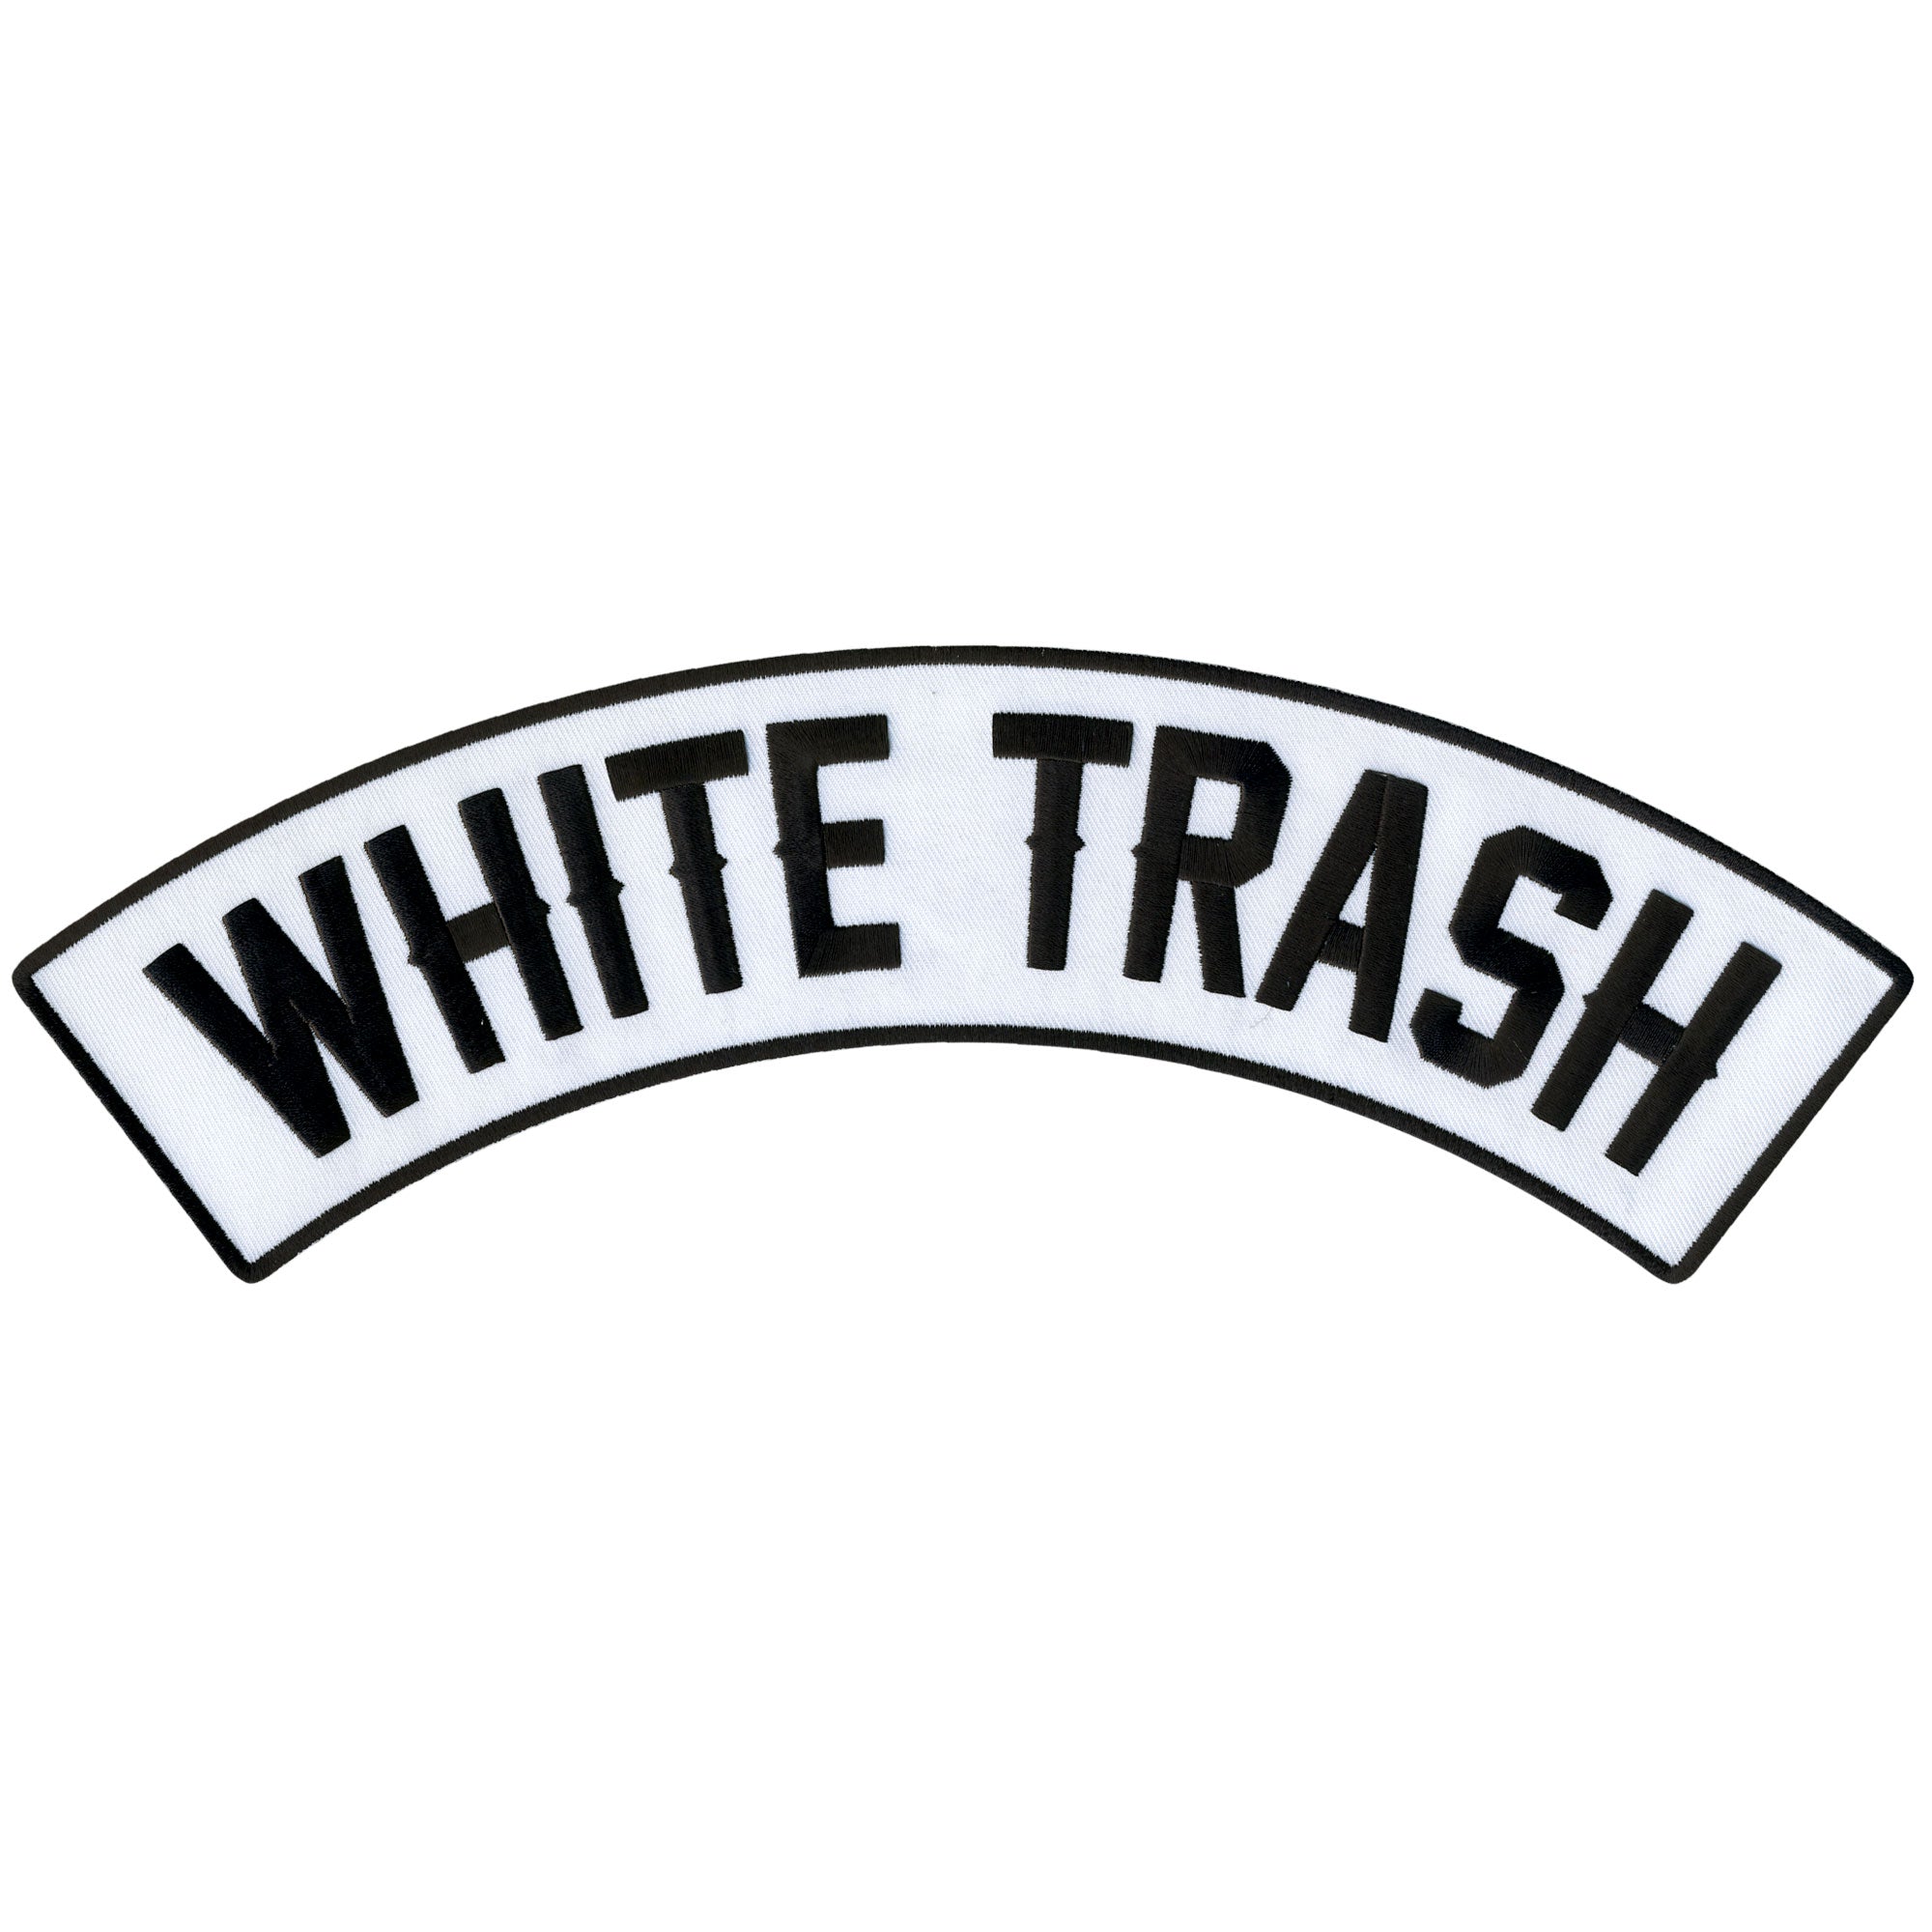 Hot Leathers White Trash 12" X 3" Top Rocker Patch